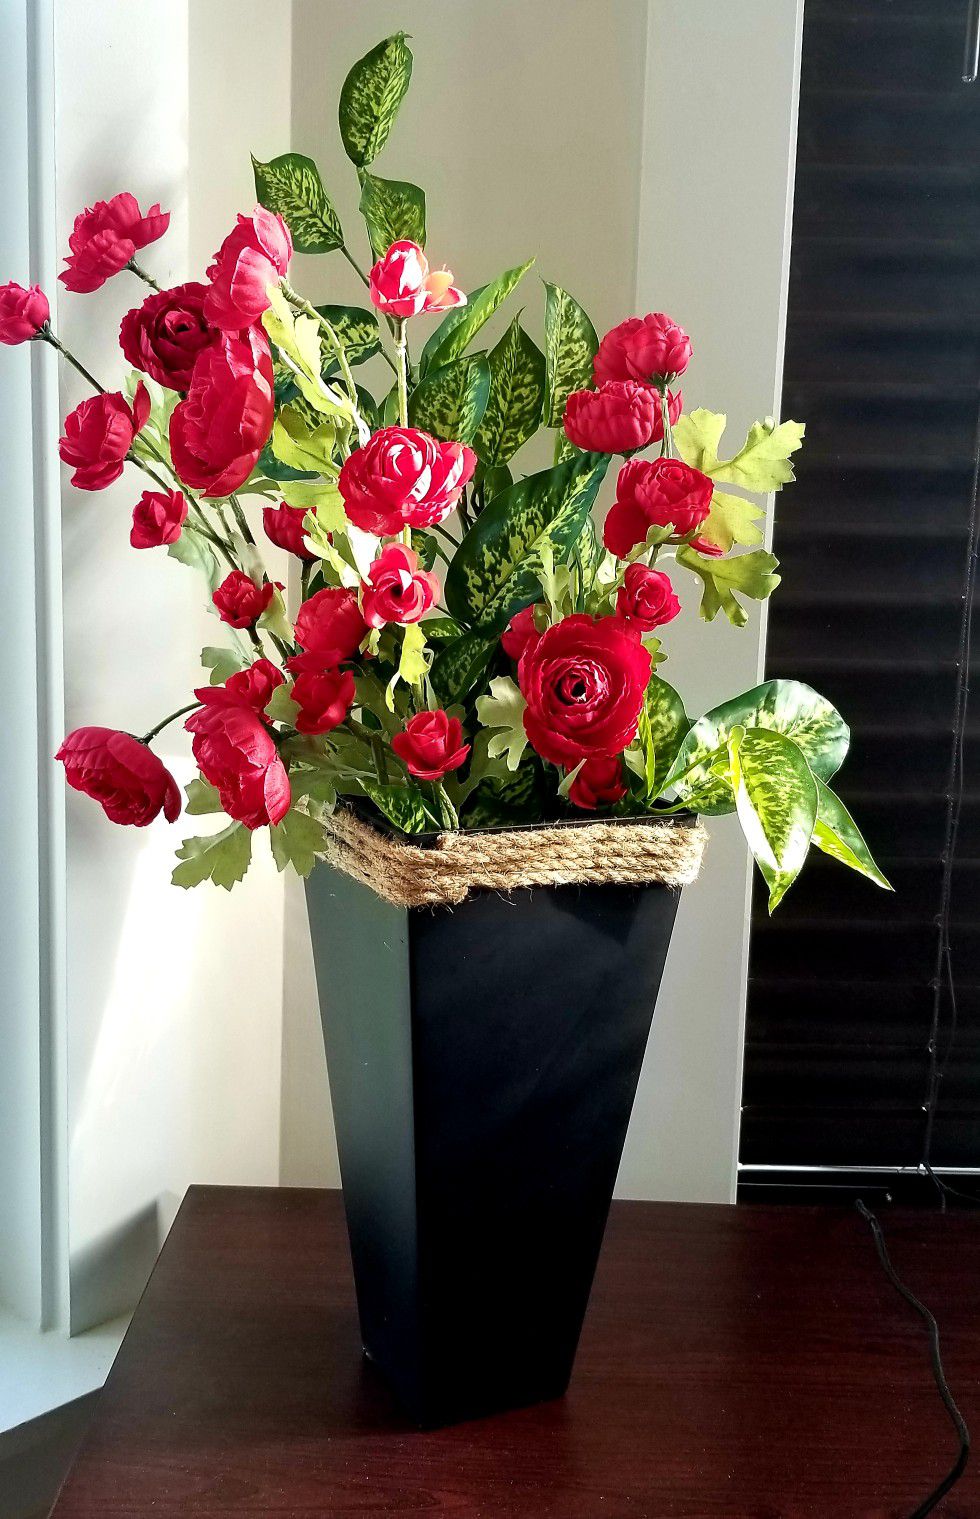 Elegant 12" Tall Black Vase with Flowers for $12